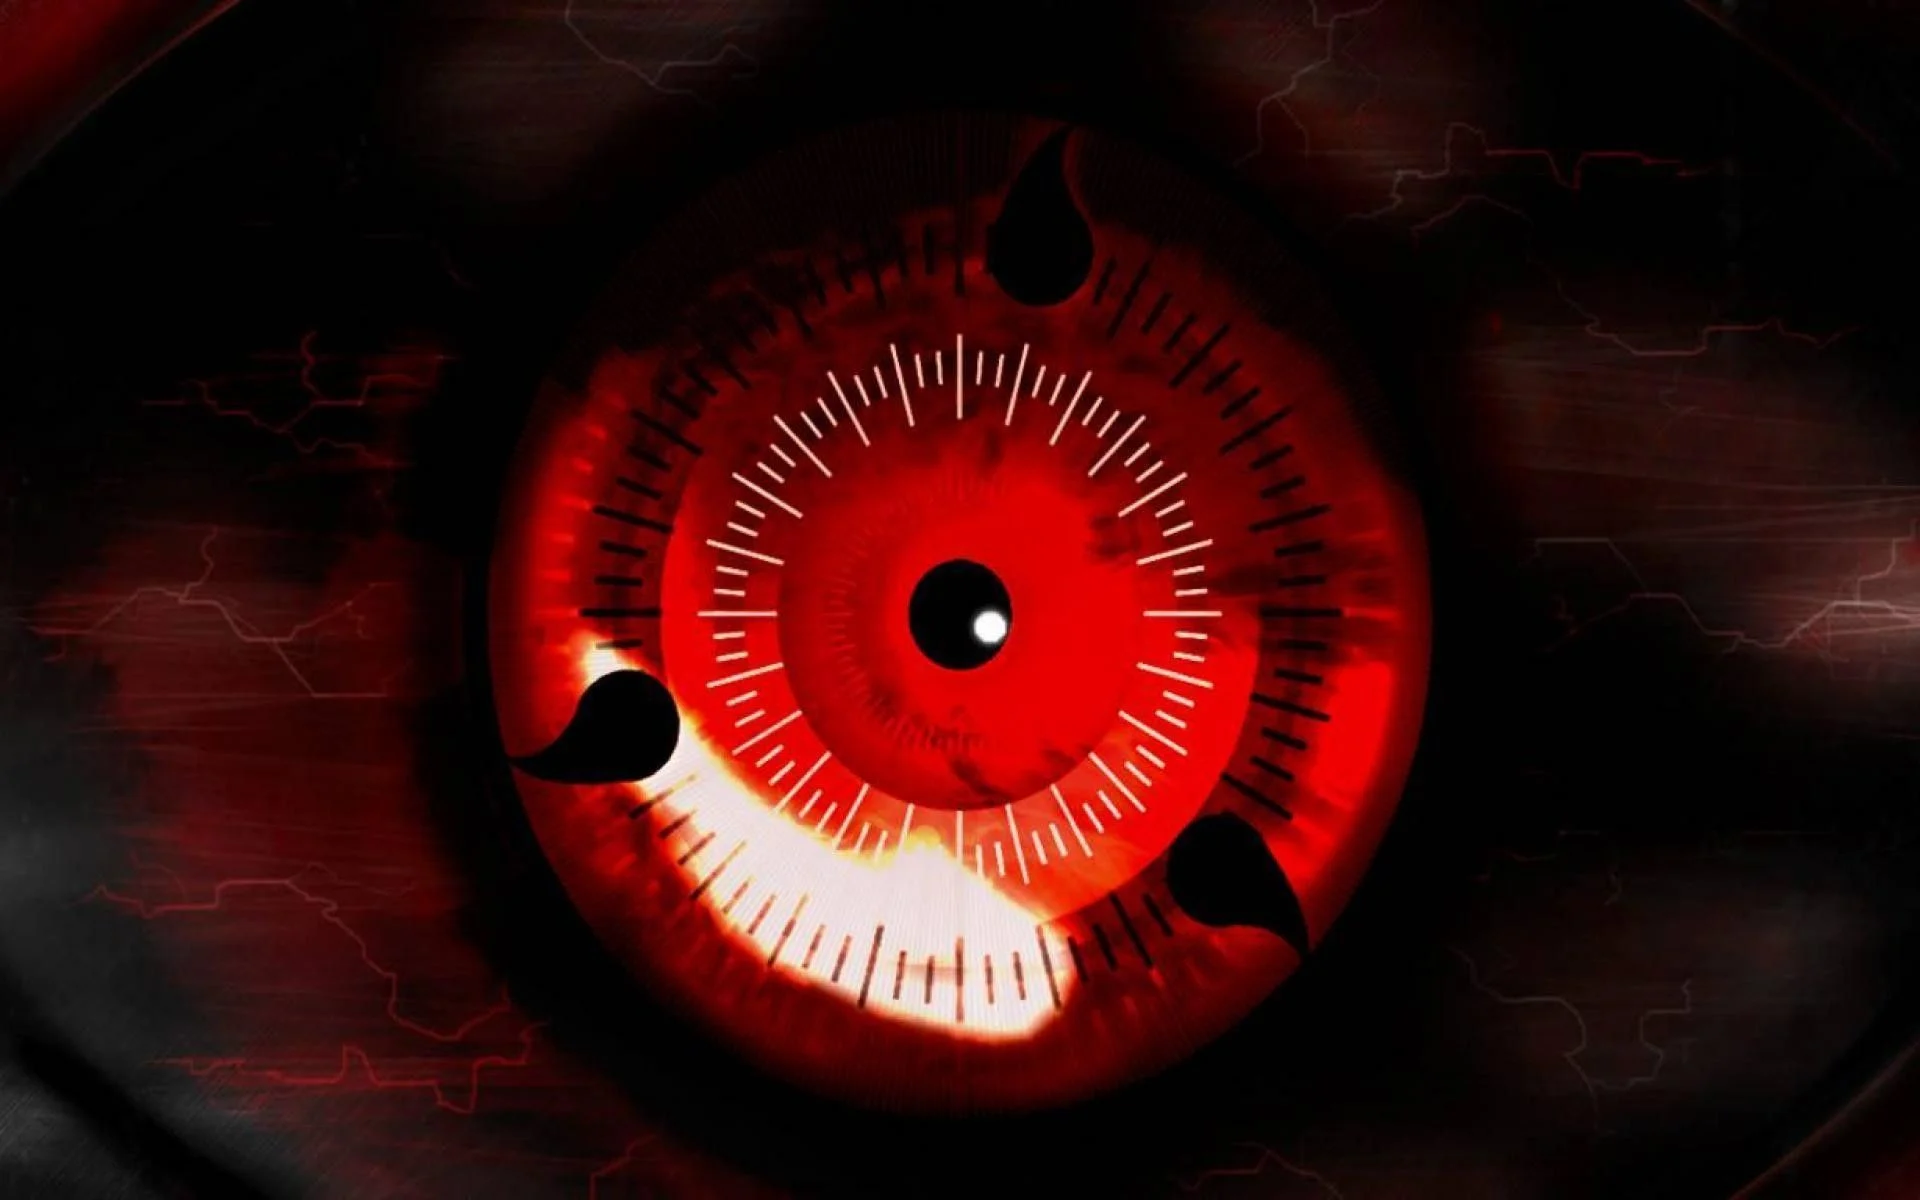 Sharingan Eye Ball - A Powerful Ninja Tool From Naruto Series